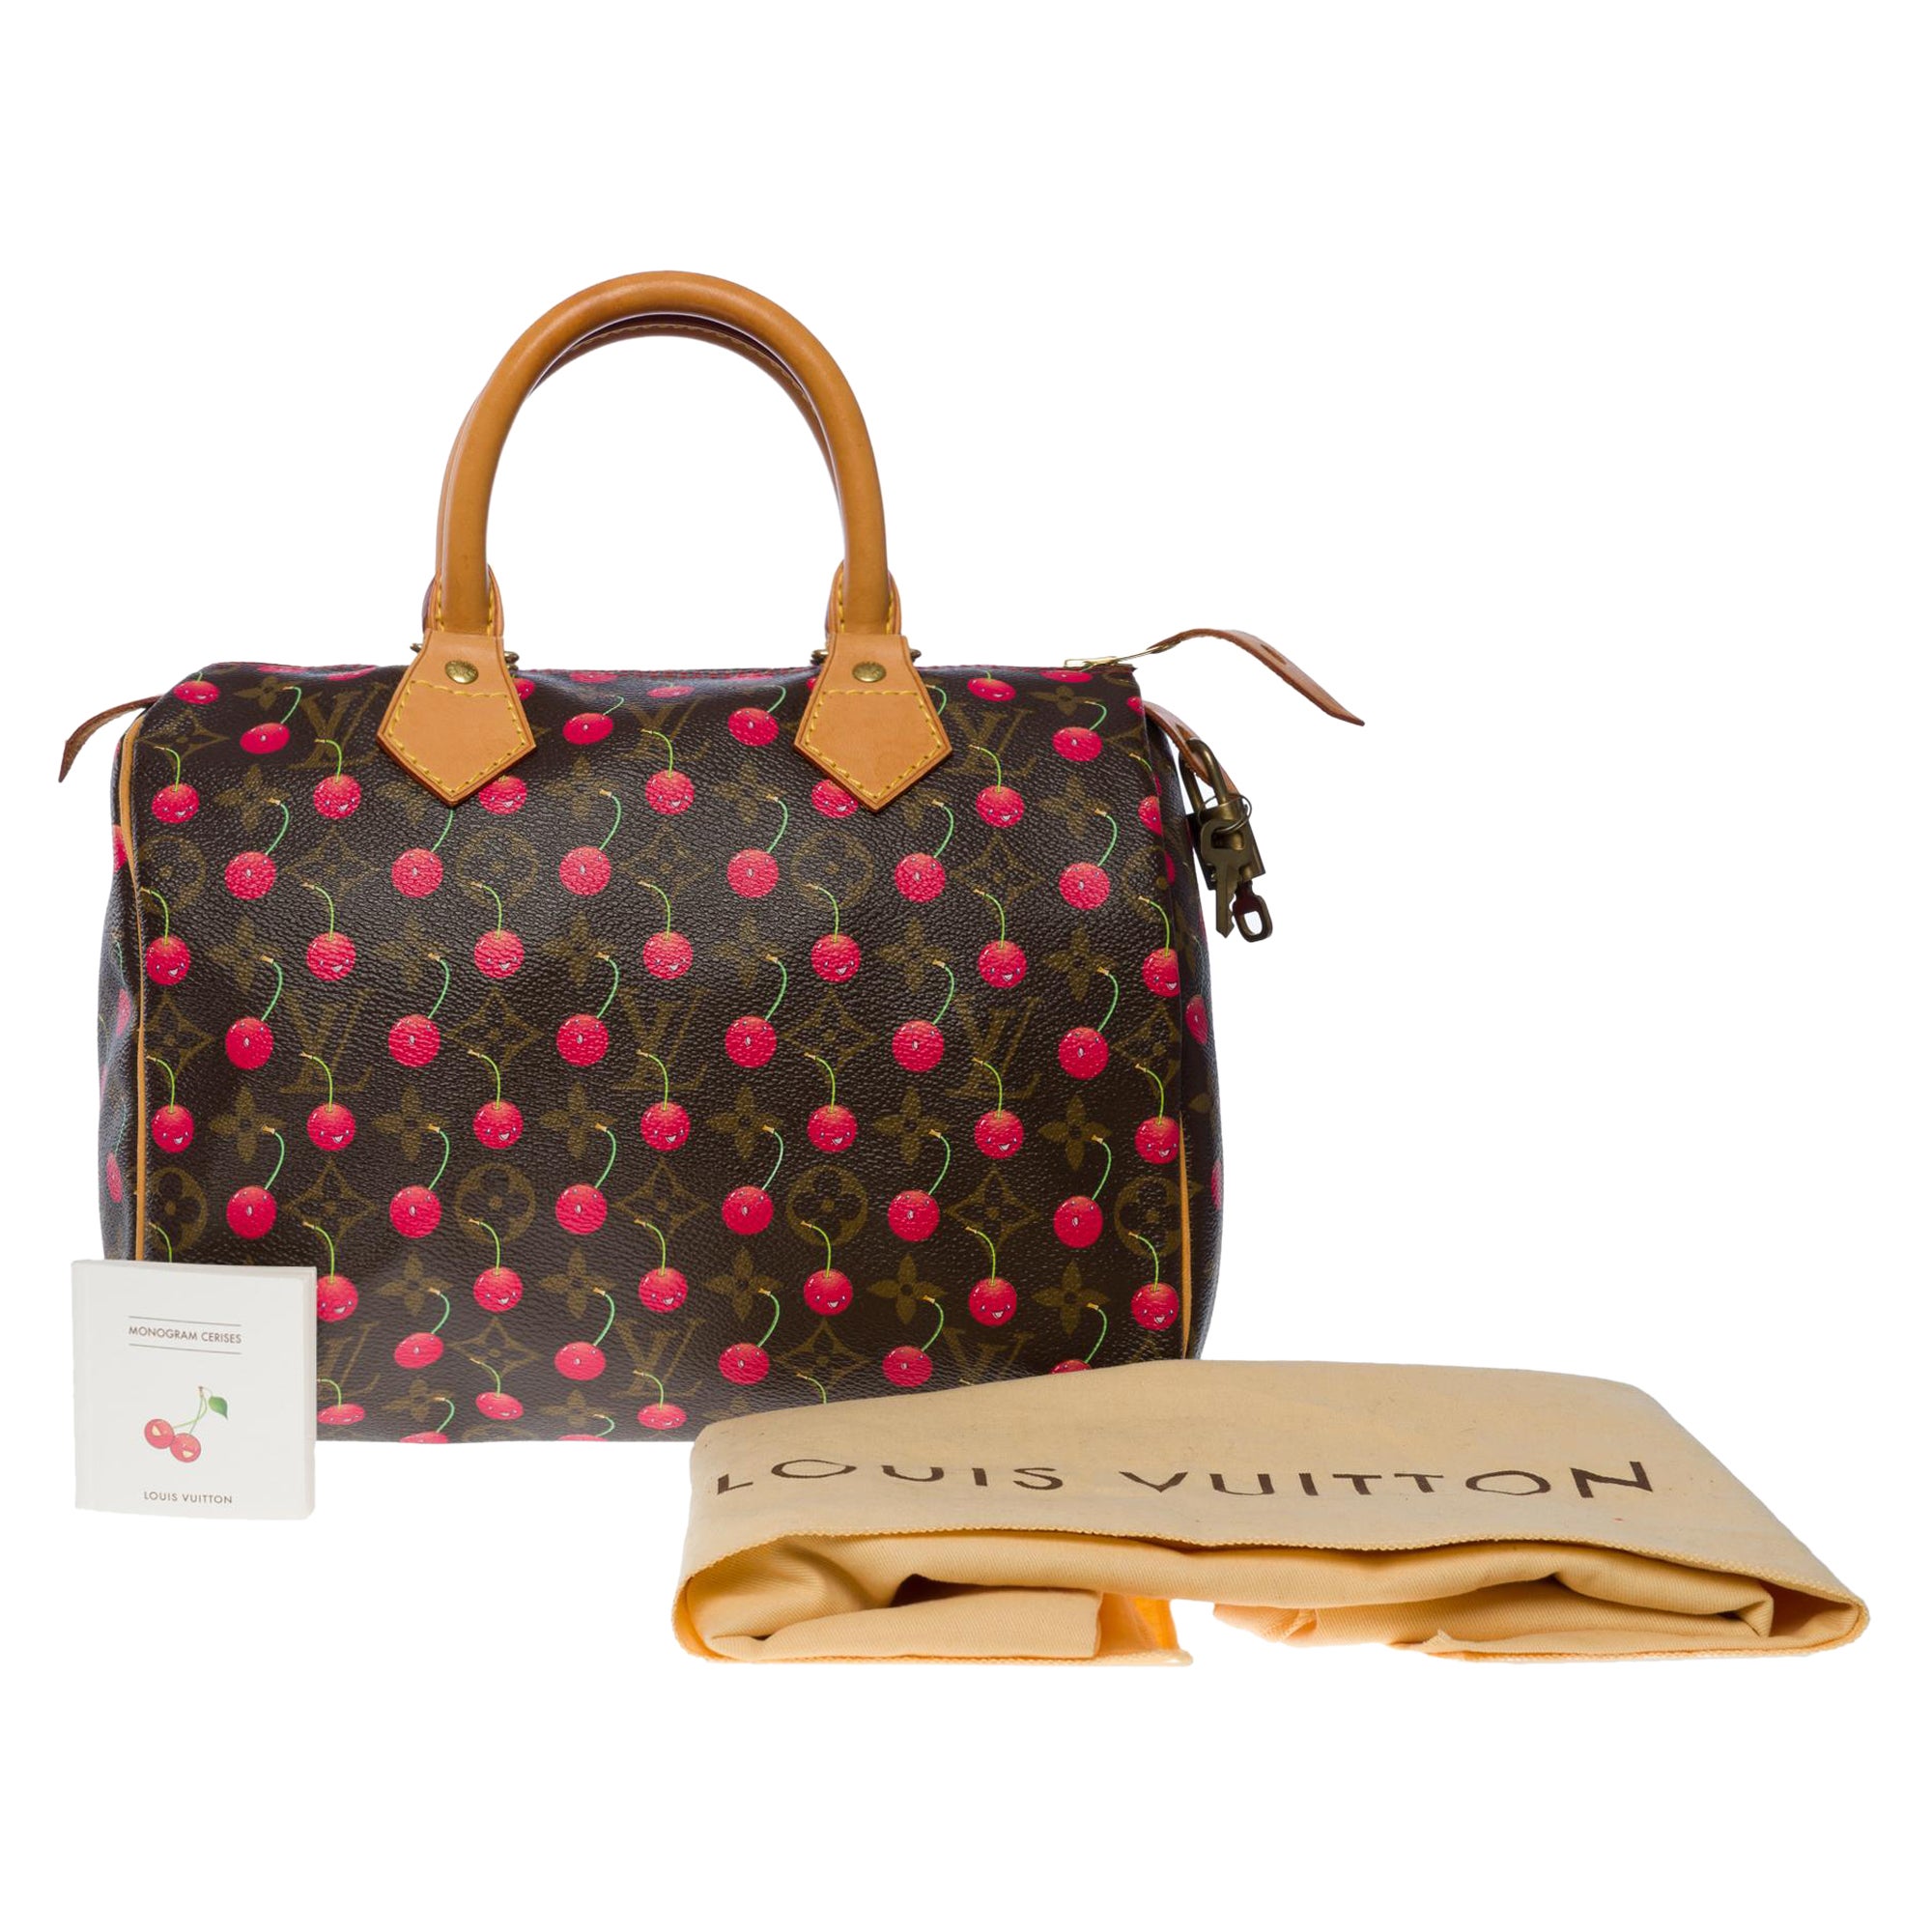 Louis Vuitton Speedy 25 Murakami limited edition handbag in brown canvas, GHW